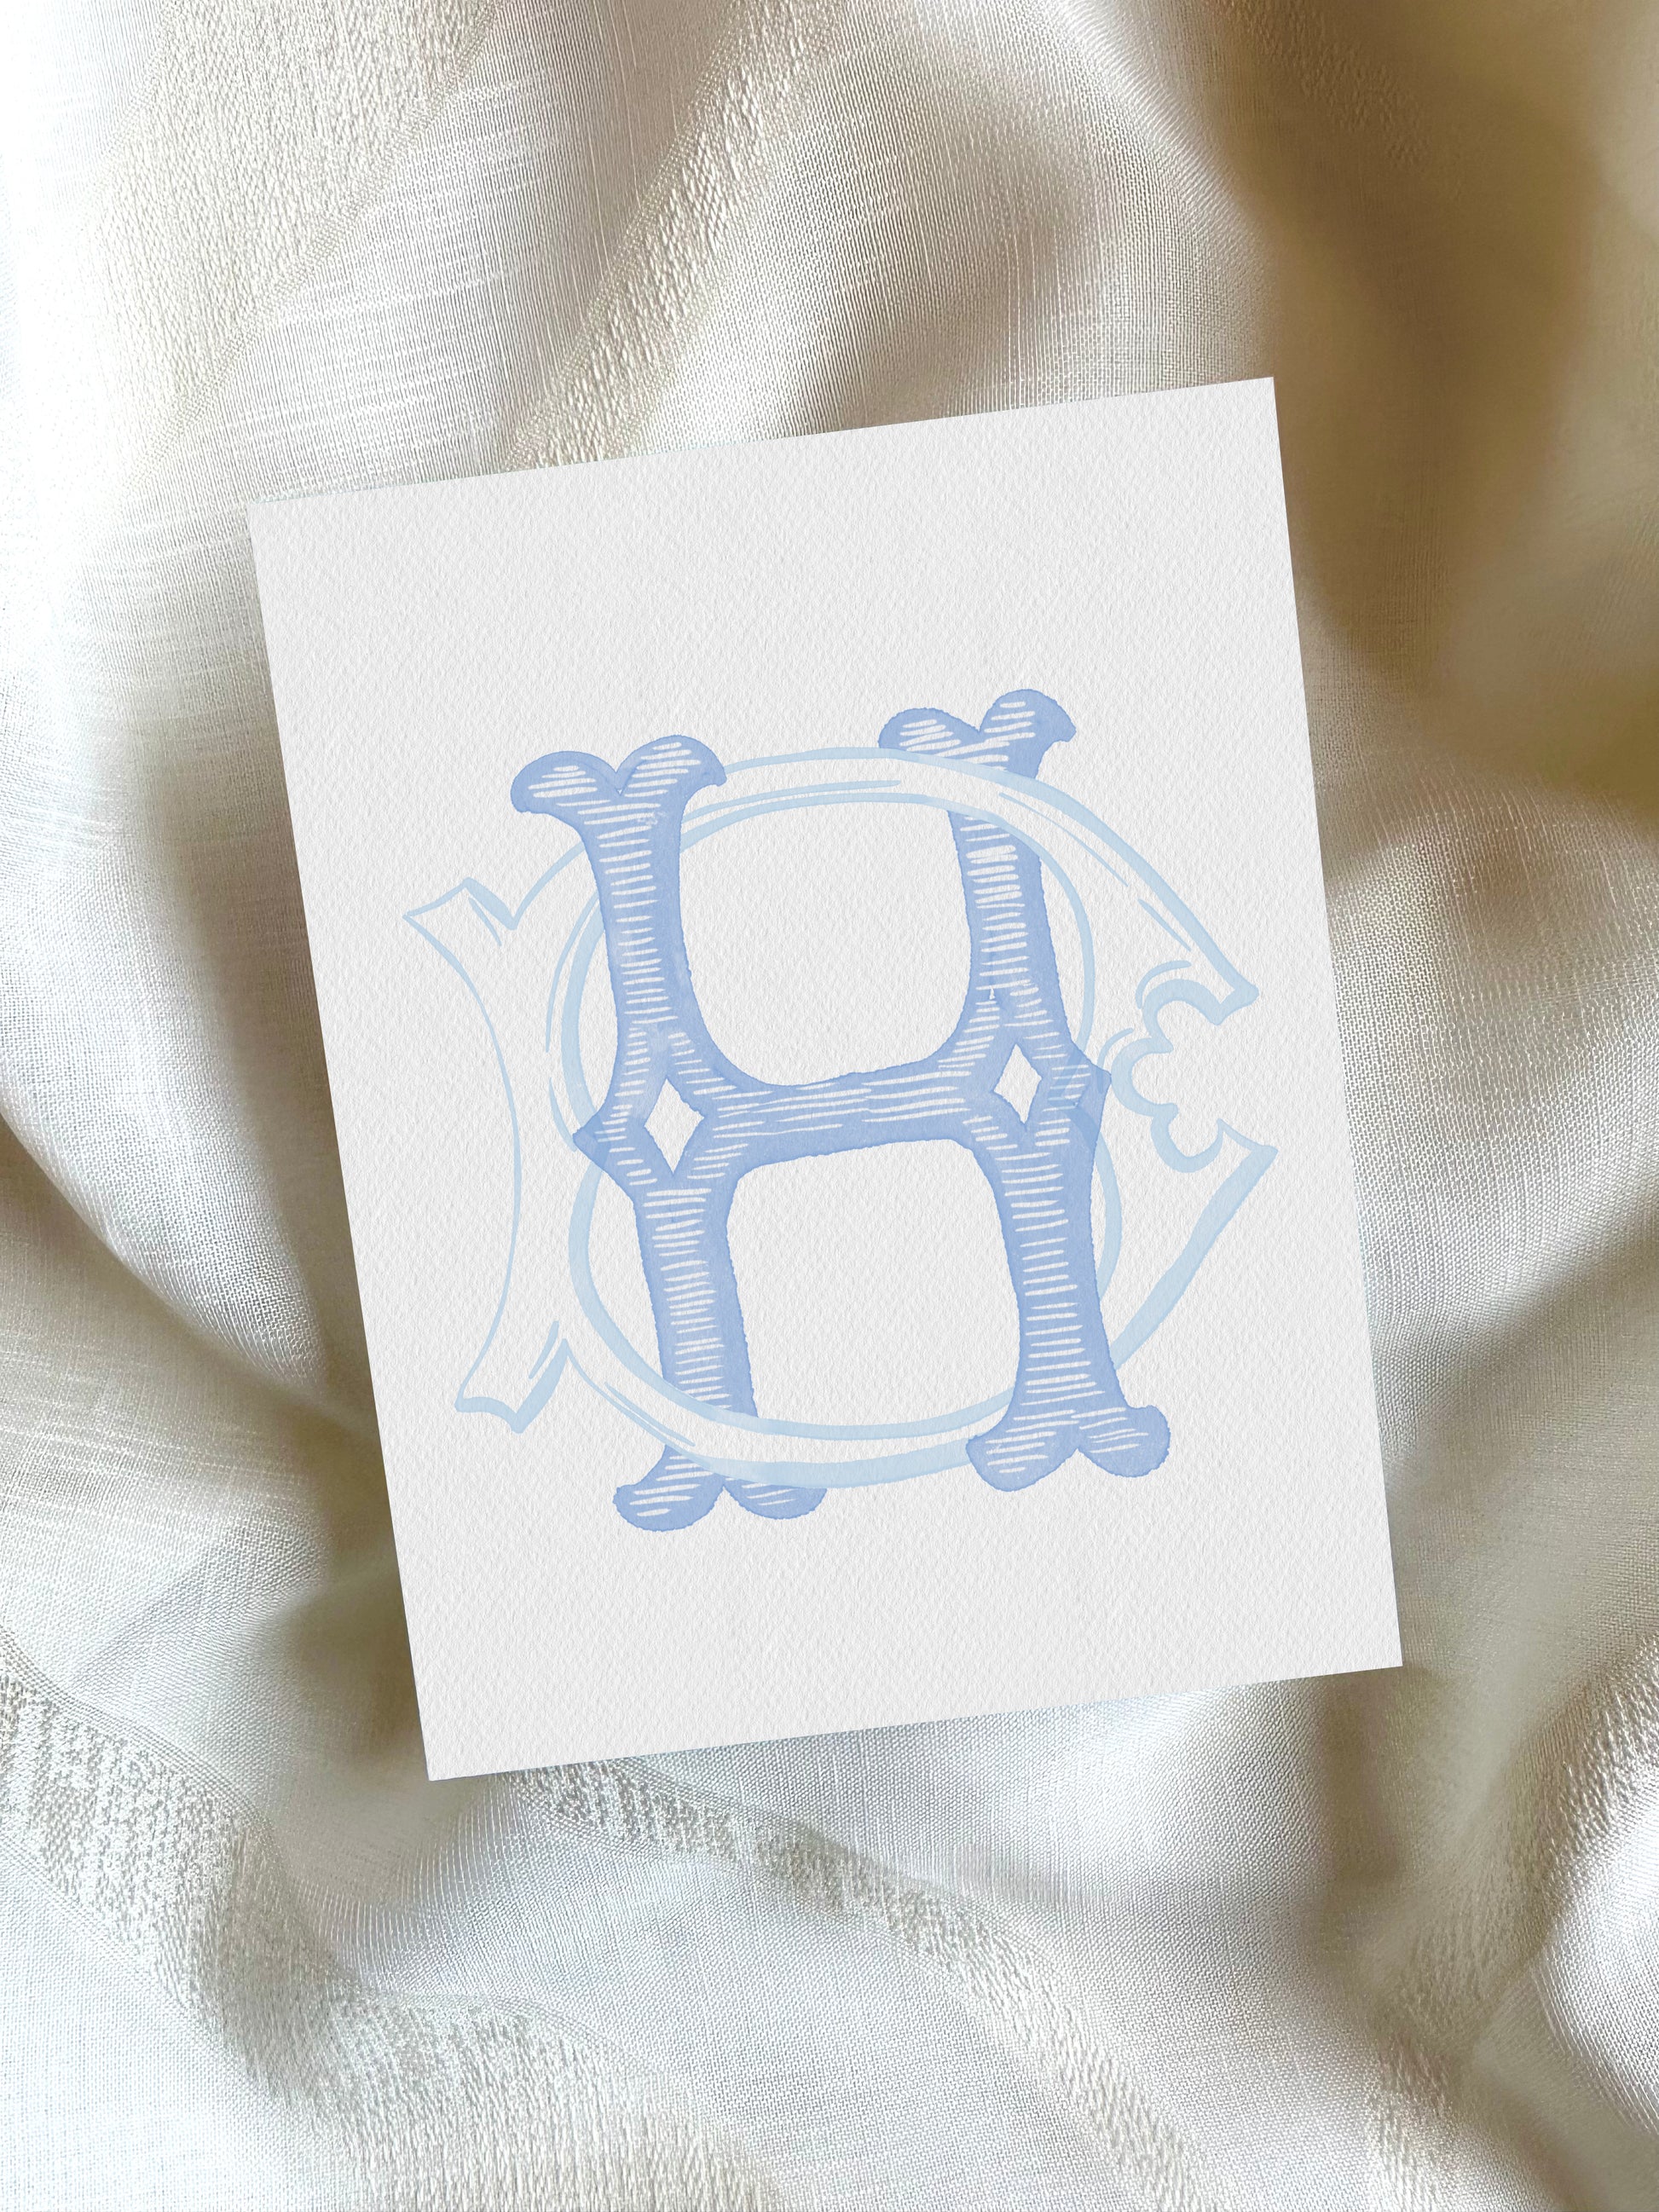 2 Letter Monogram with Letters DH HD | Digital Download - Wedding Monogram SVG, Personal Logo, Wedding Logo for Wedding Invitations The Wedding Crest Lab